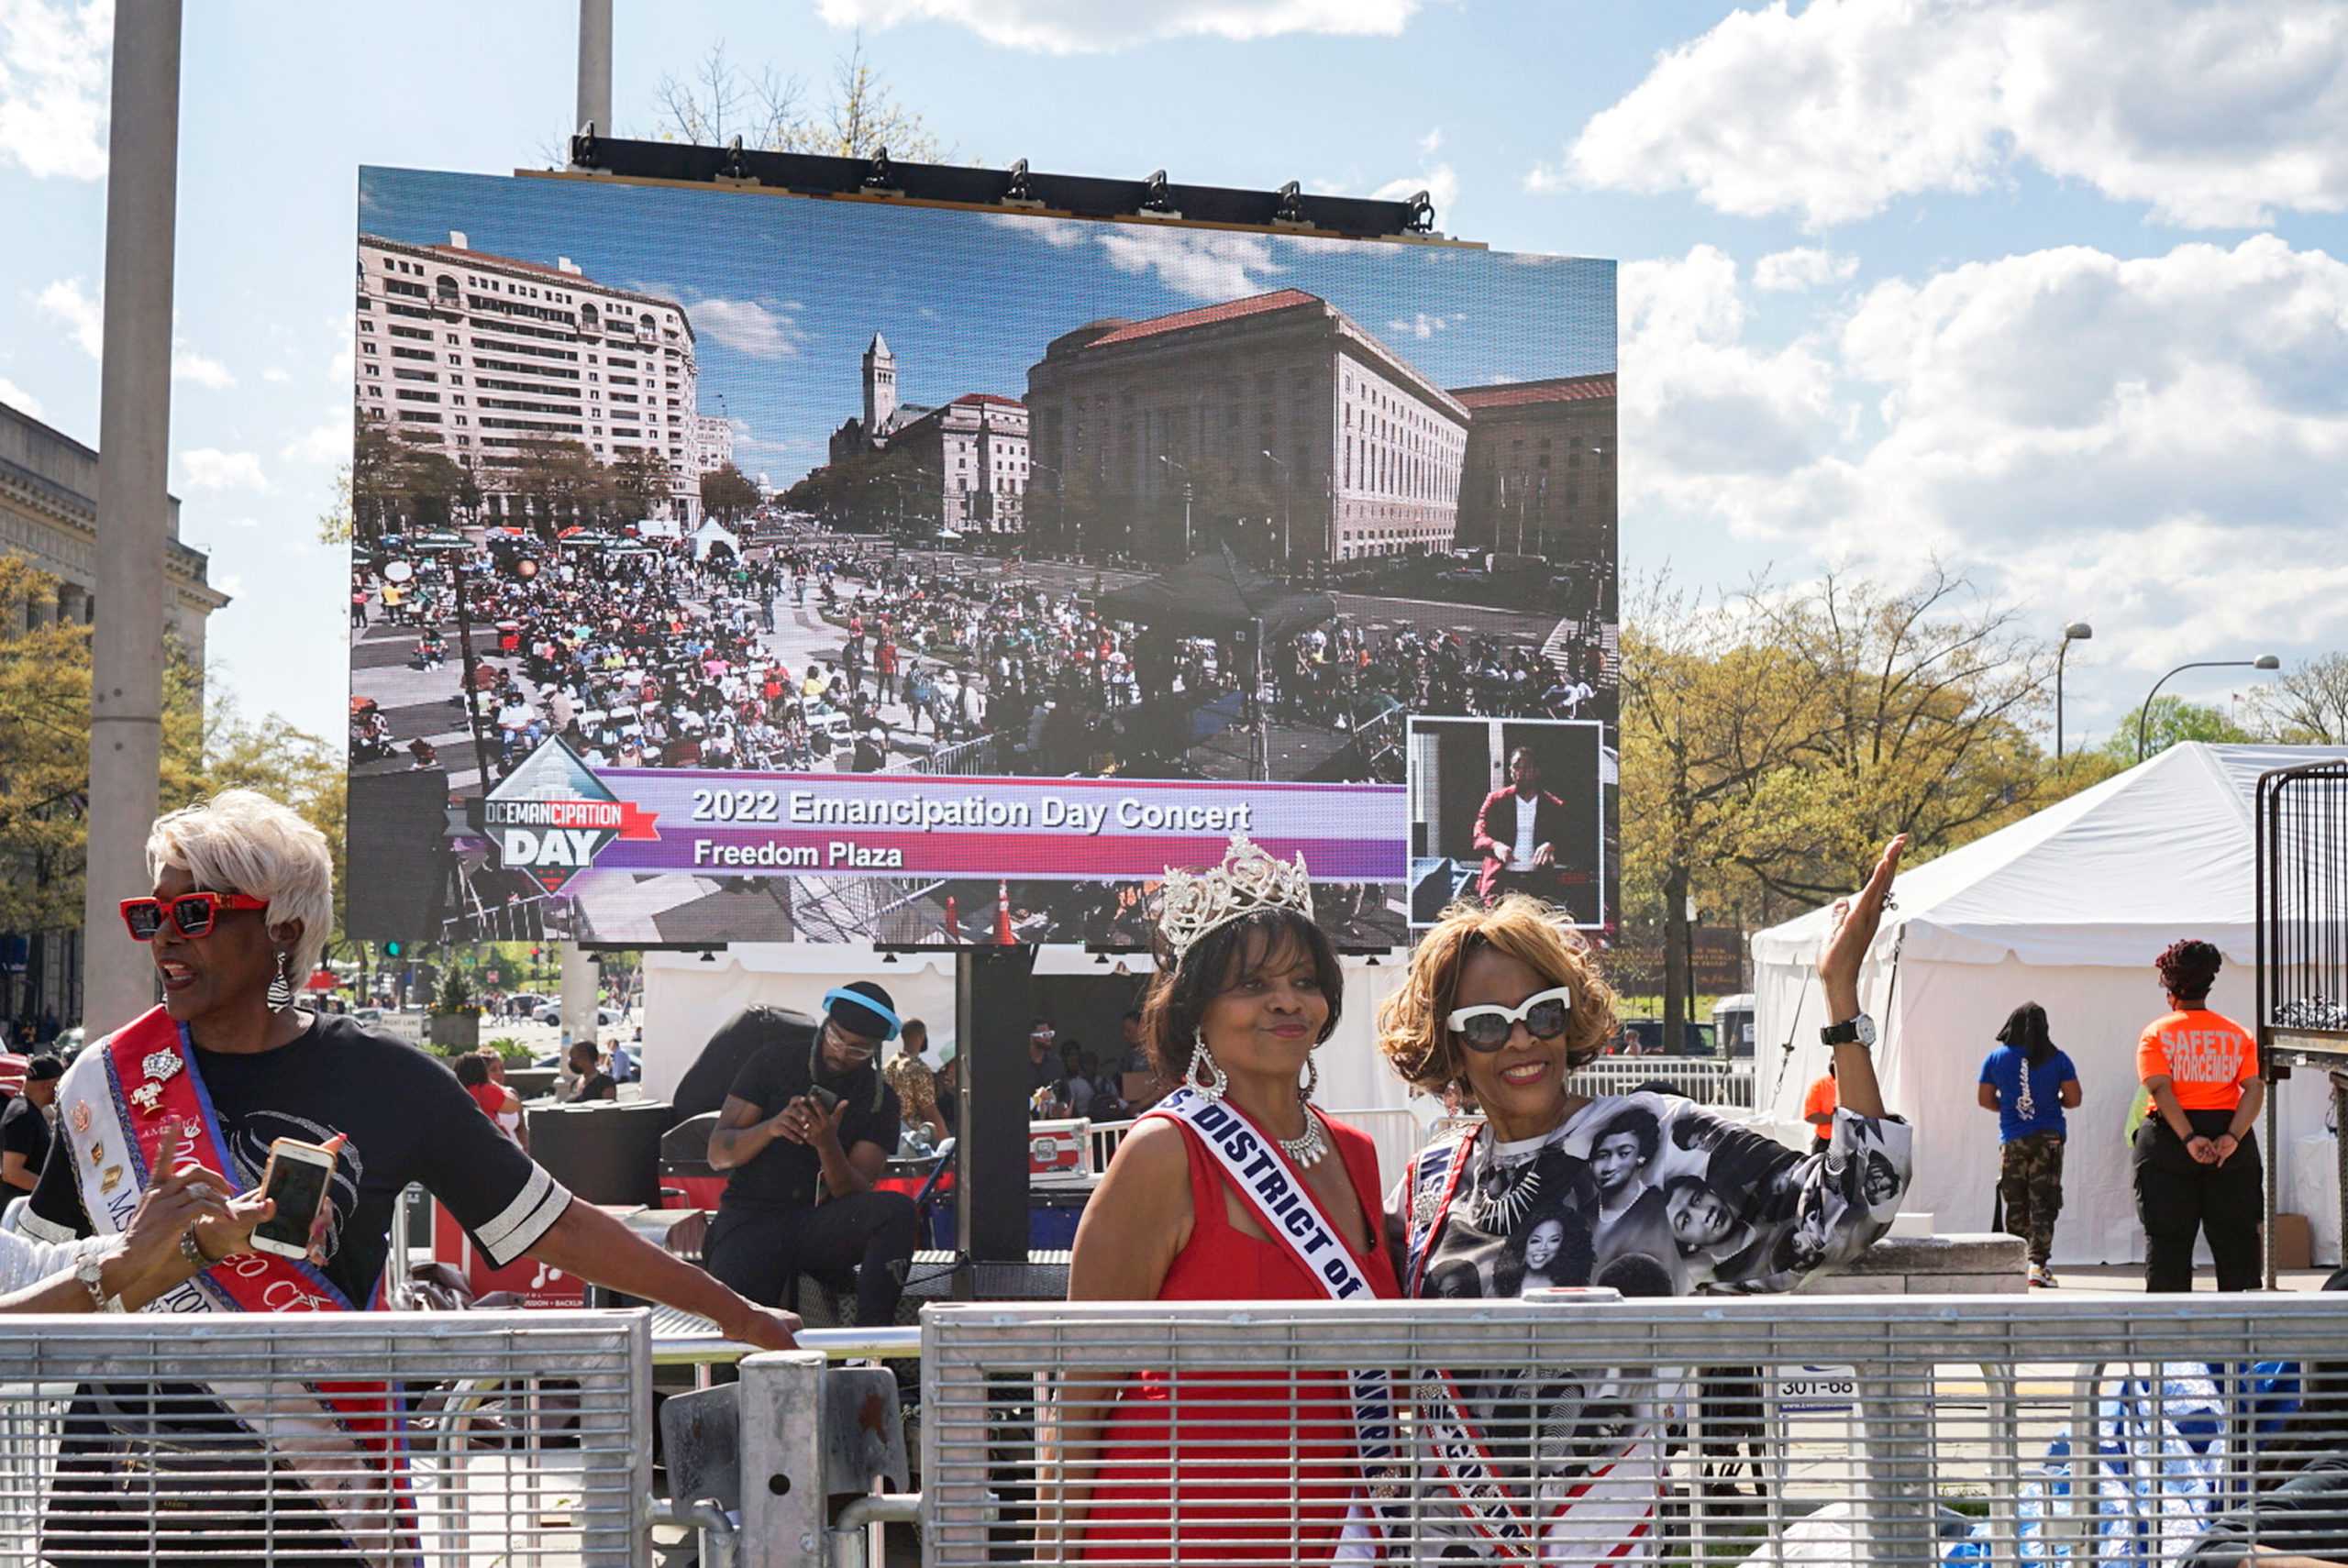 D.C. Emancipation Day celebration draws hundreds at Freedom Plaza The